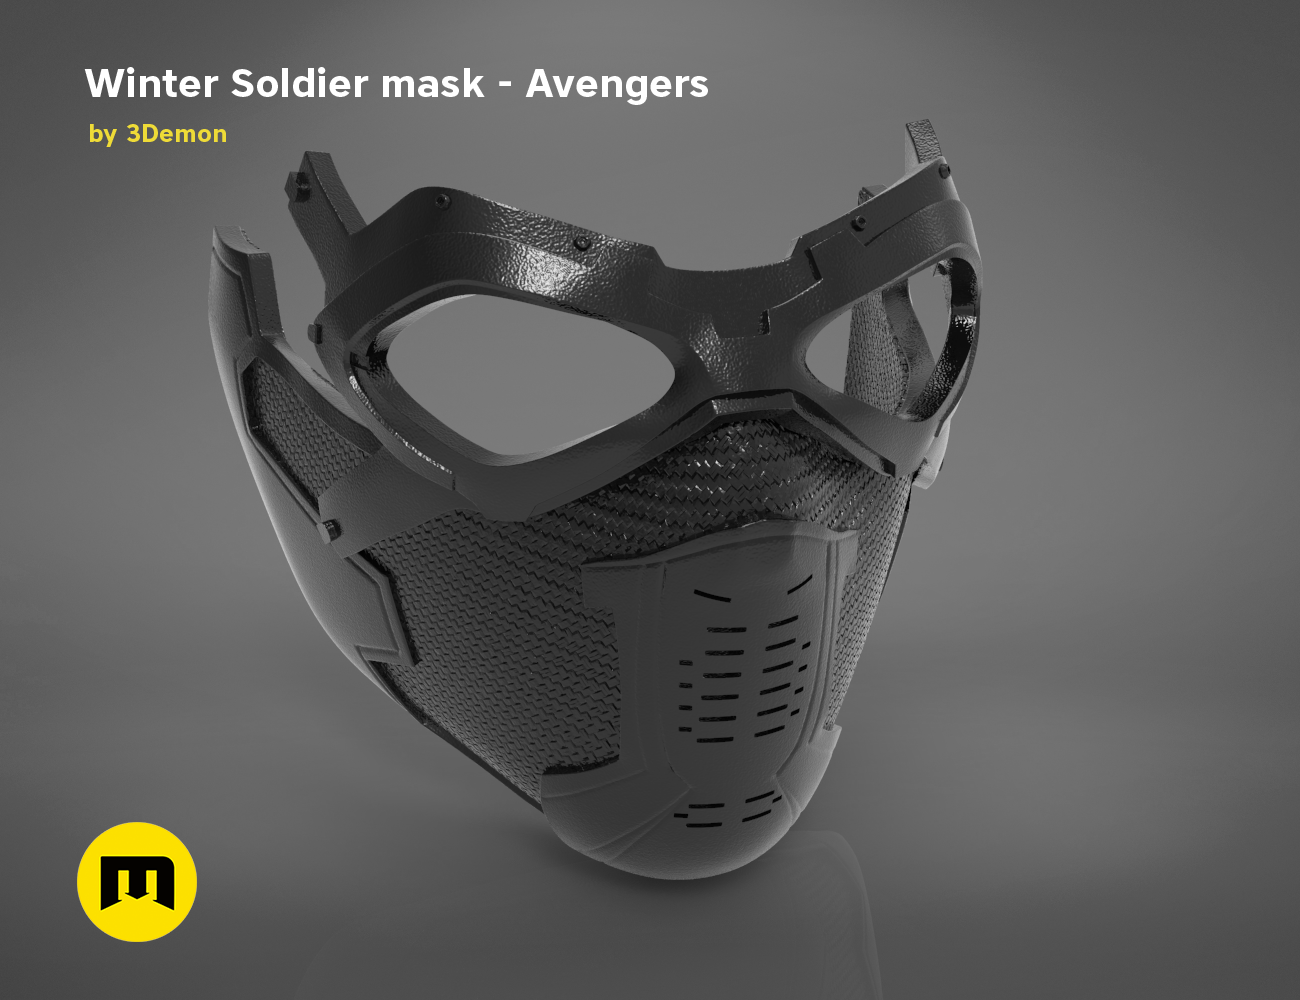 snow goggle ski mask 3D model